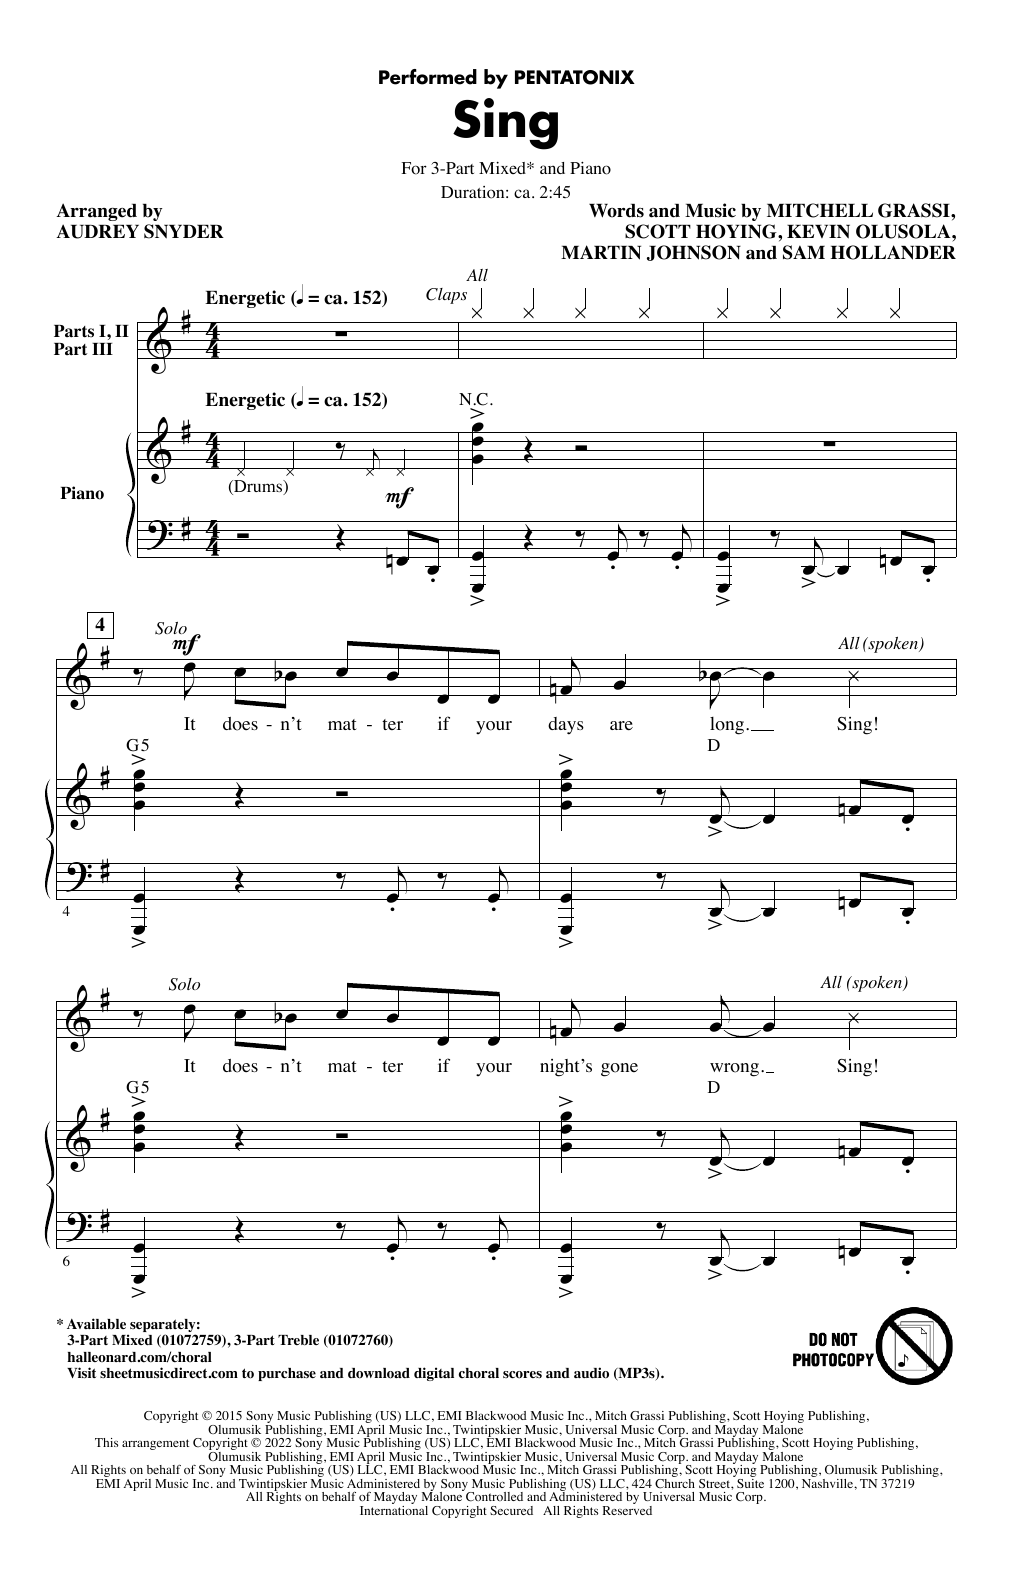 Download Pentatonix Sing (arr. Audrey Snyder) Sheet Music